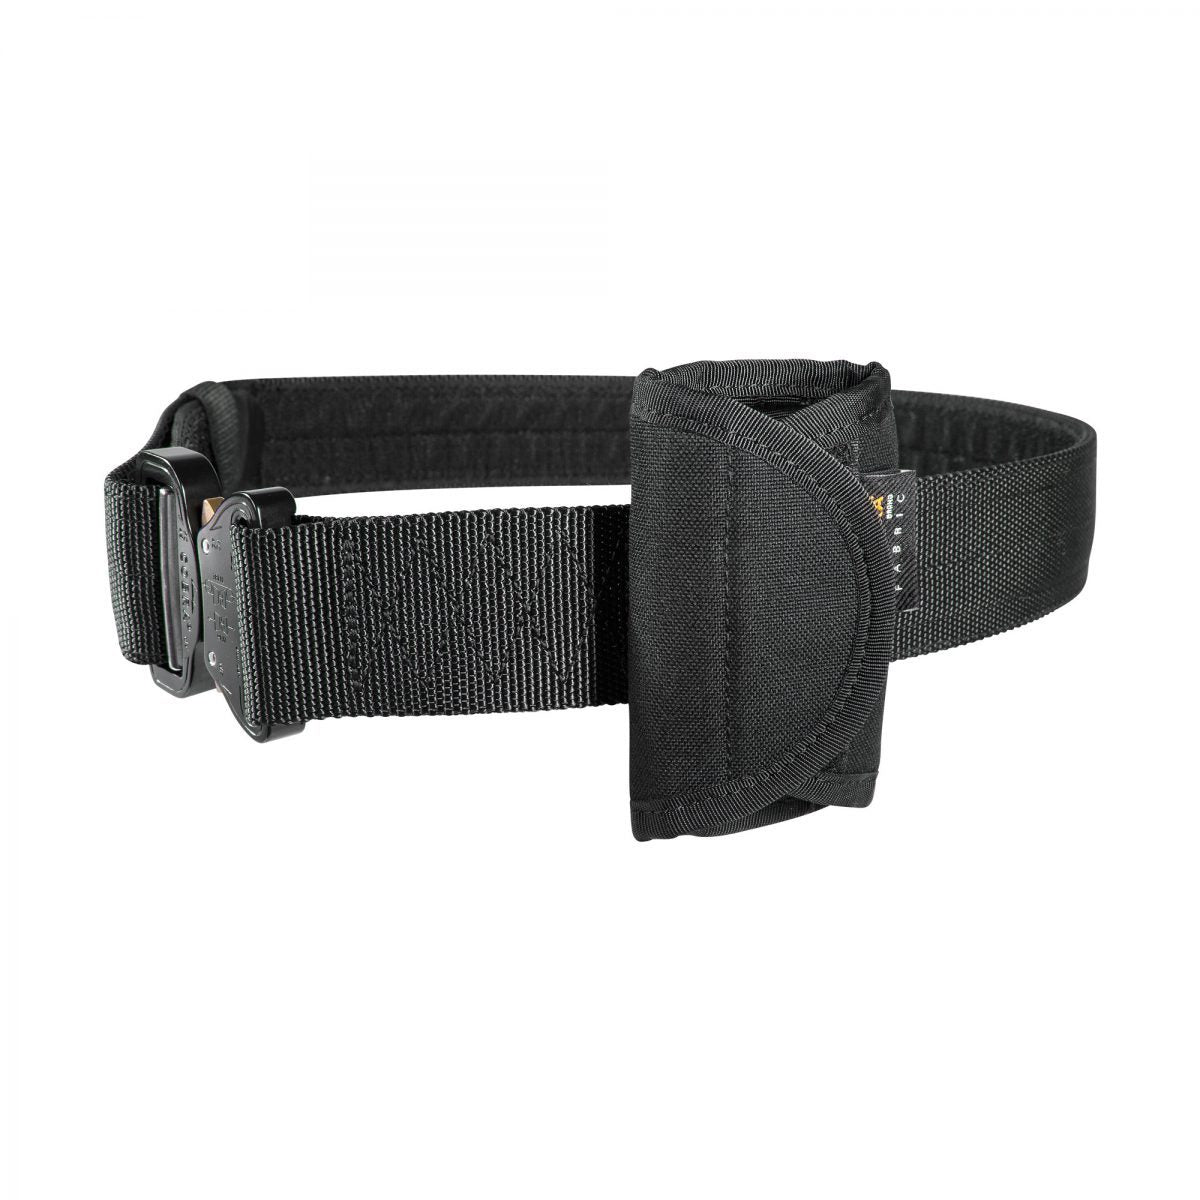 Tasmanian Tiger Silent Key Holder MKII Belt Pouch Black Tactical Distributors Ltd New Zealand